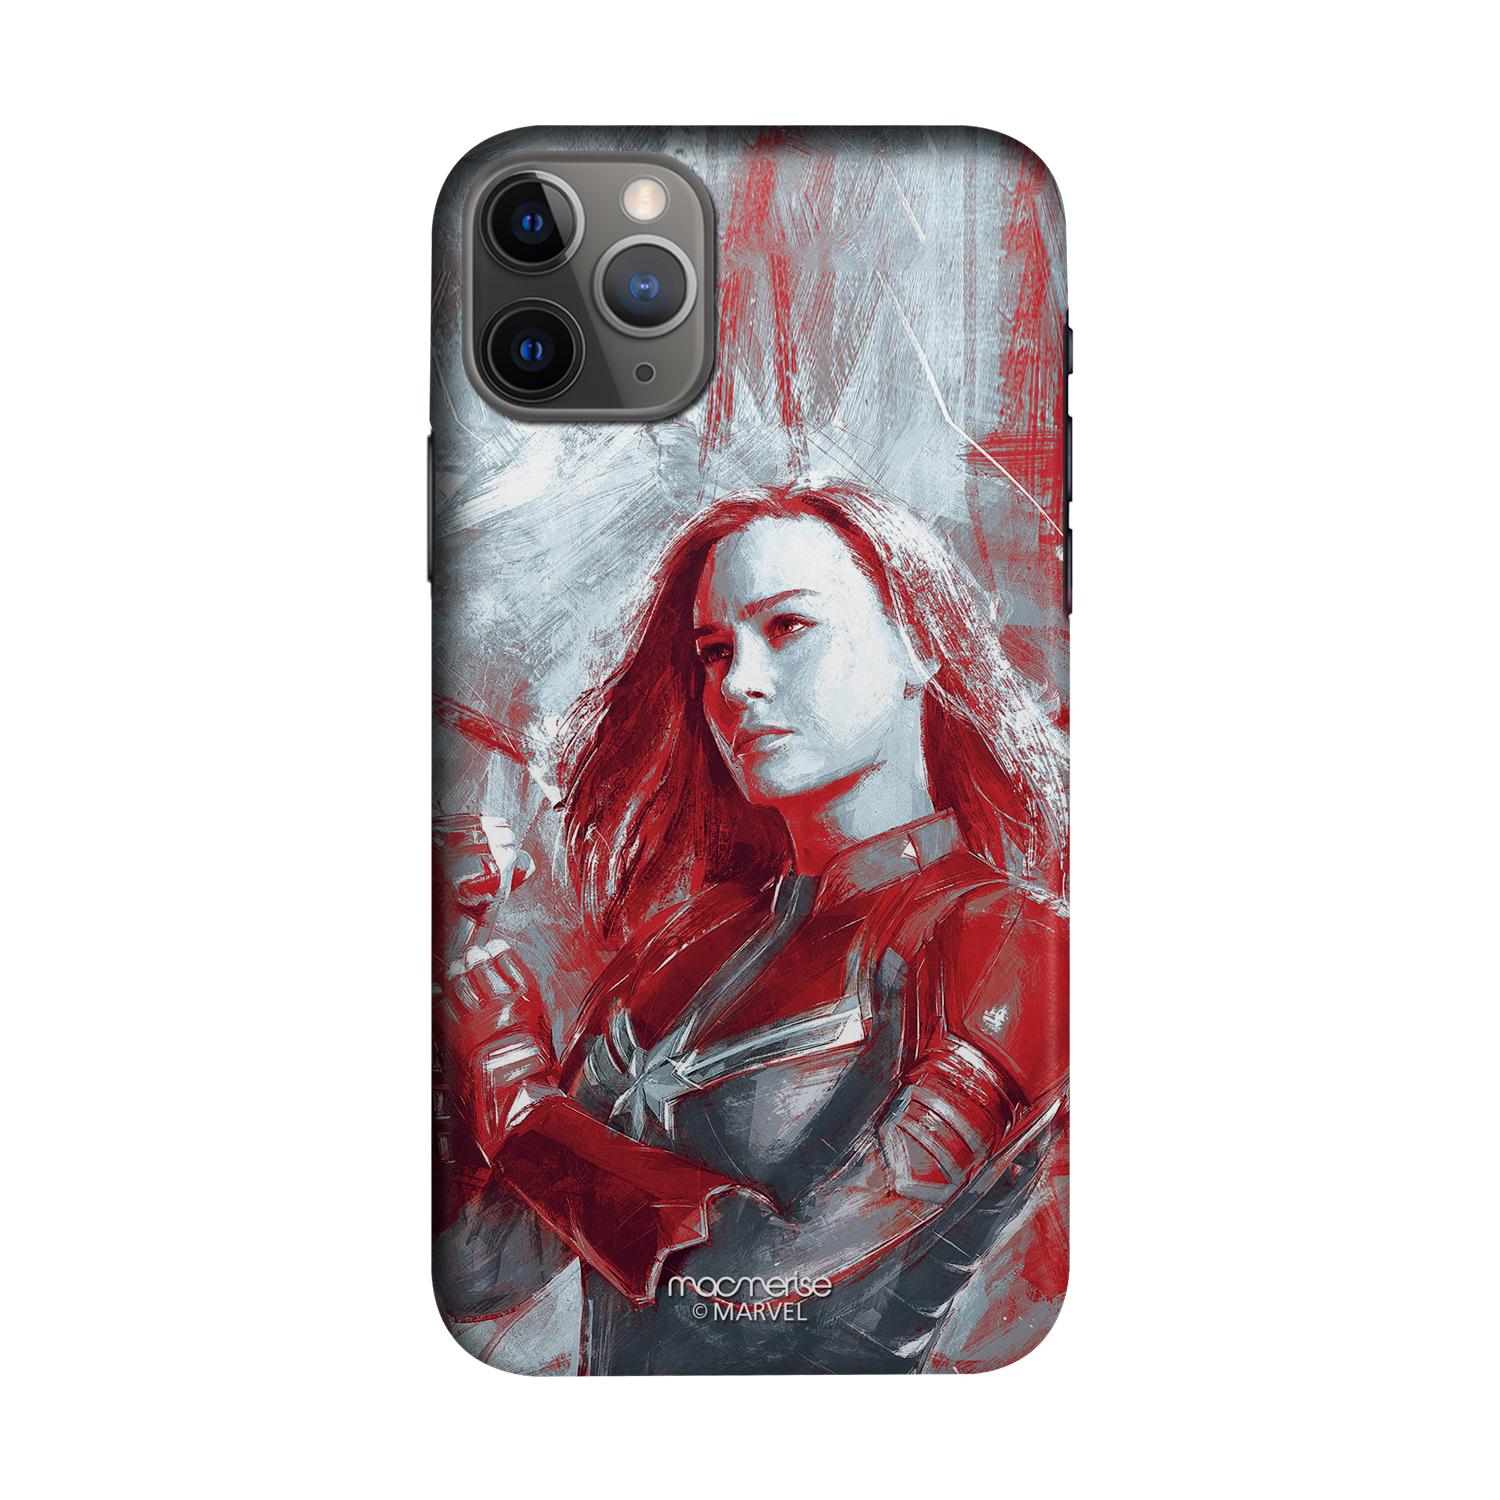 Buy Charcoal Art Capt Marvel - Sleek Phone Case for iPhone 11 Pro Max Online